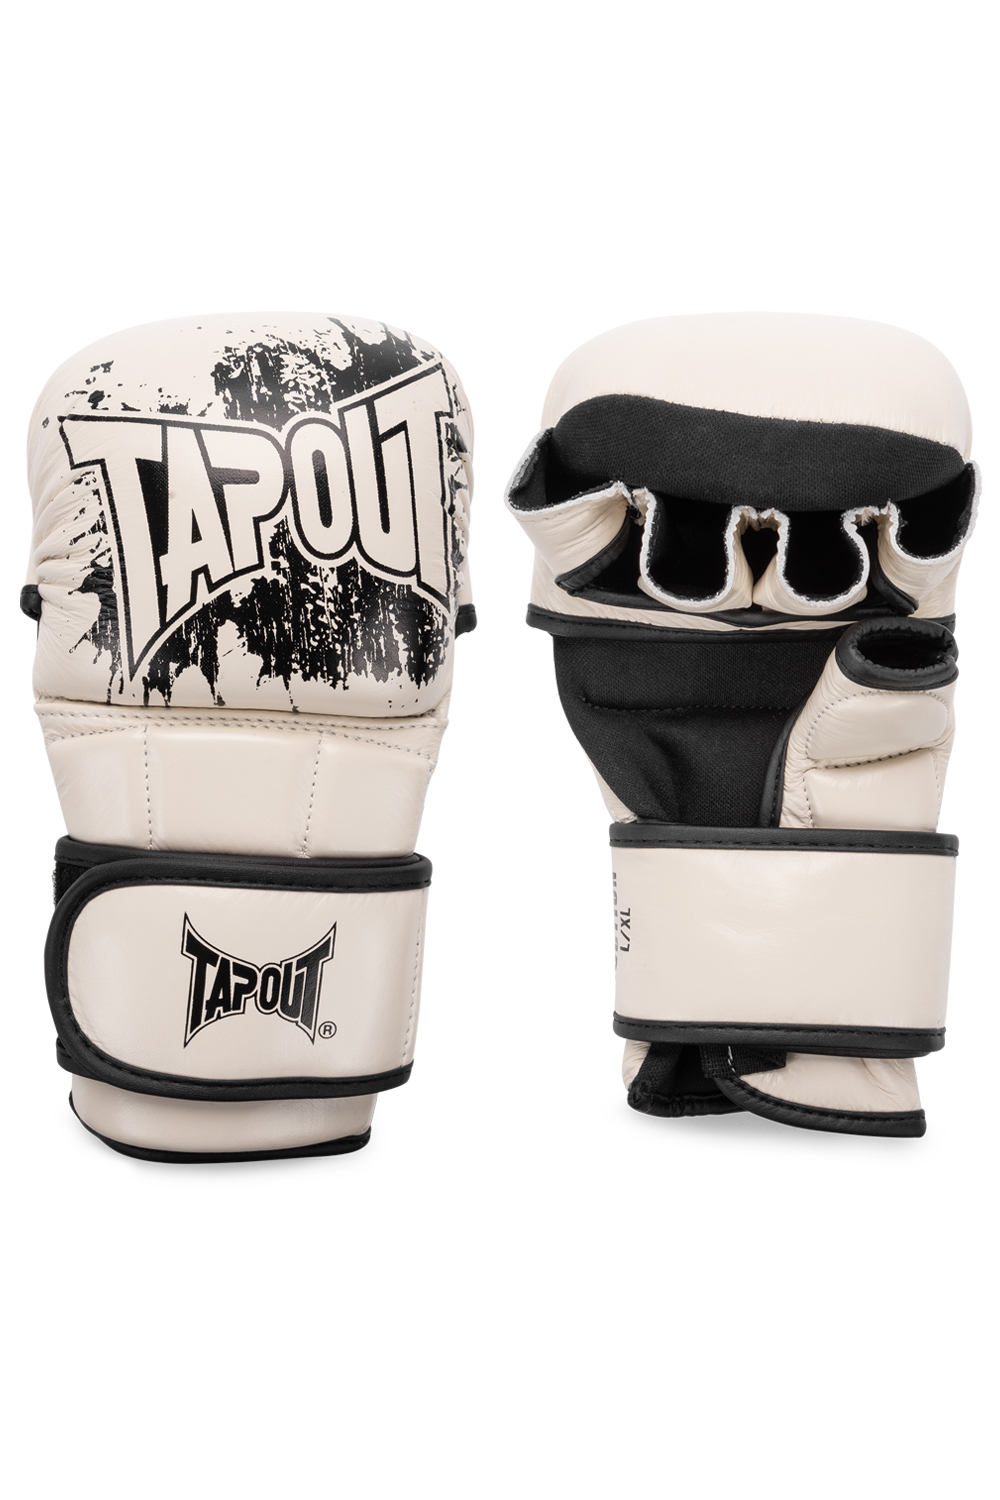 Tapout MMA-Sparring-Handschuhe Aus Leder (1 Paar)